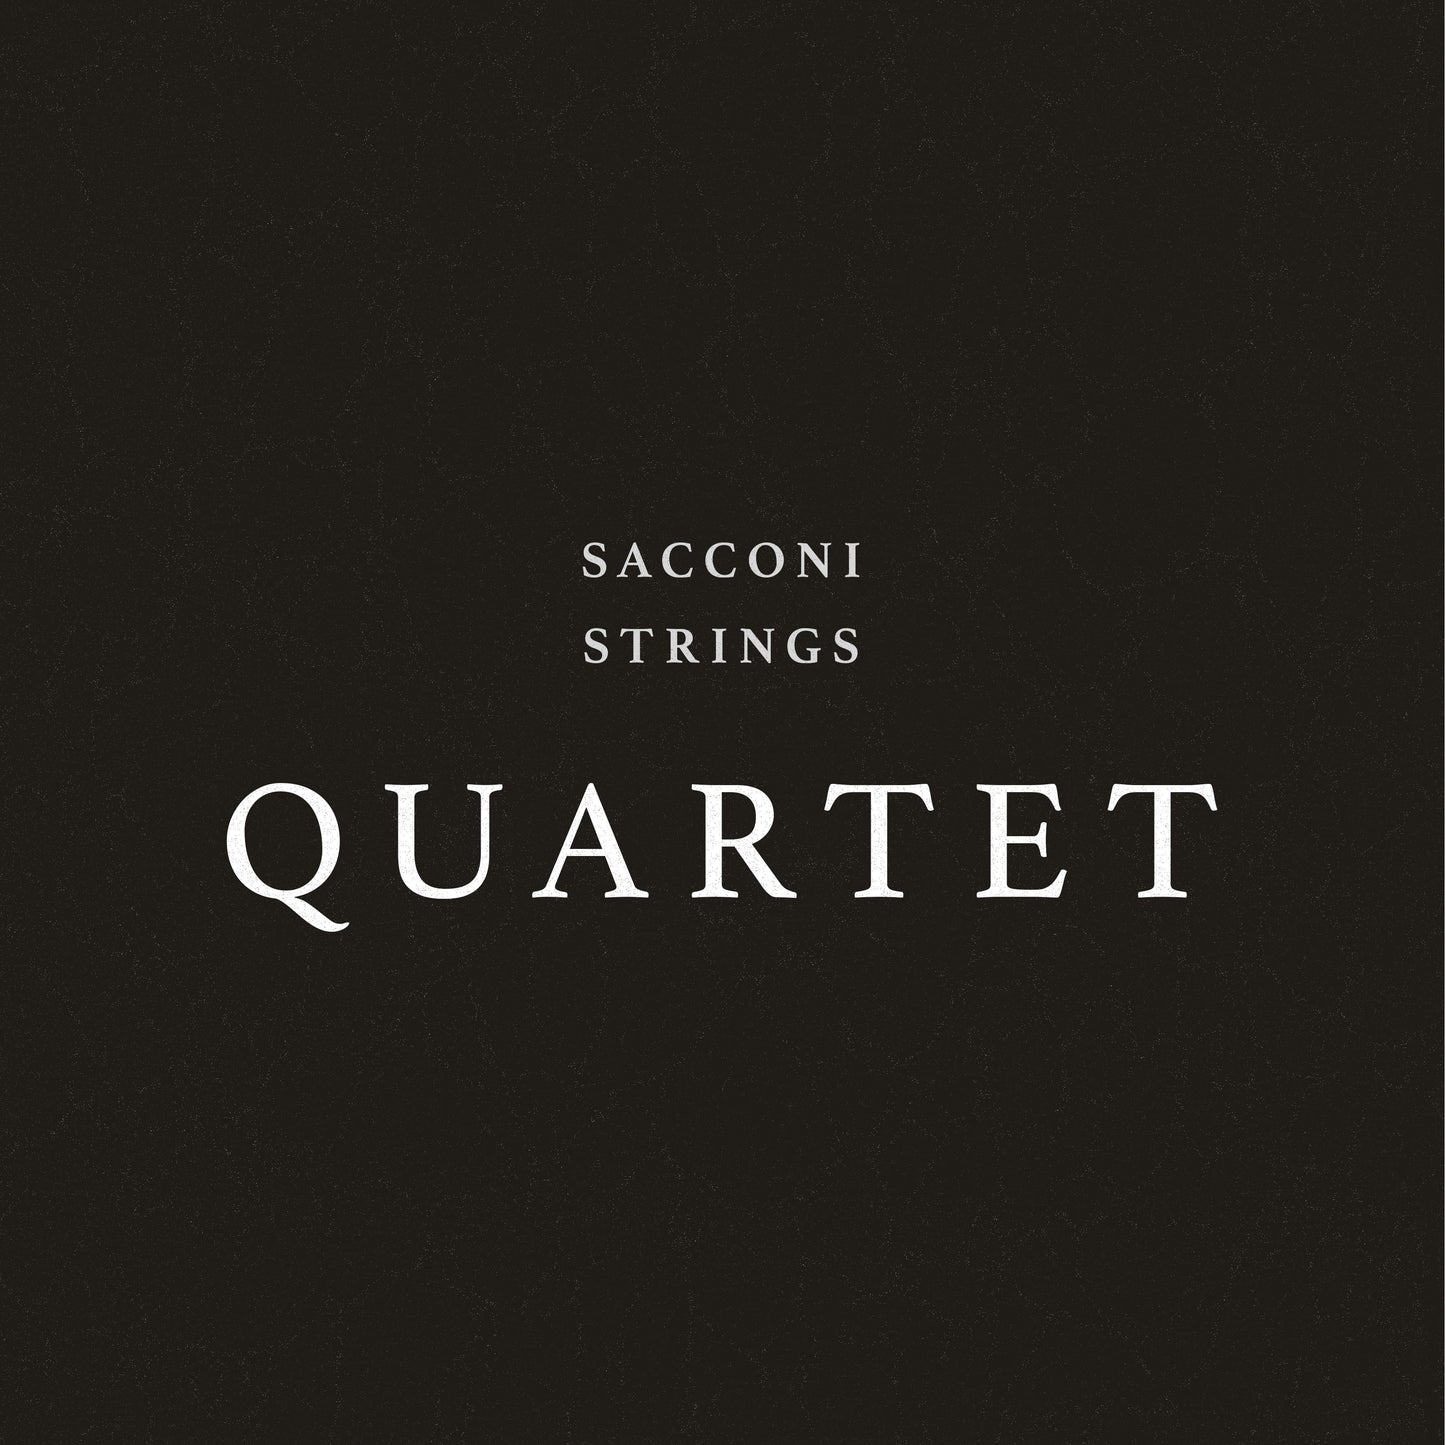 Sacconi Strings - Quartet